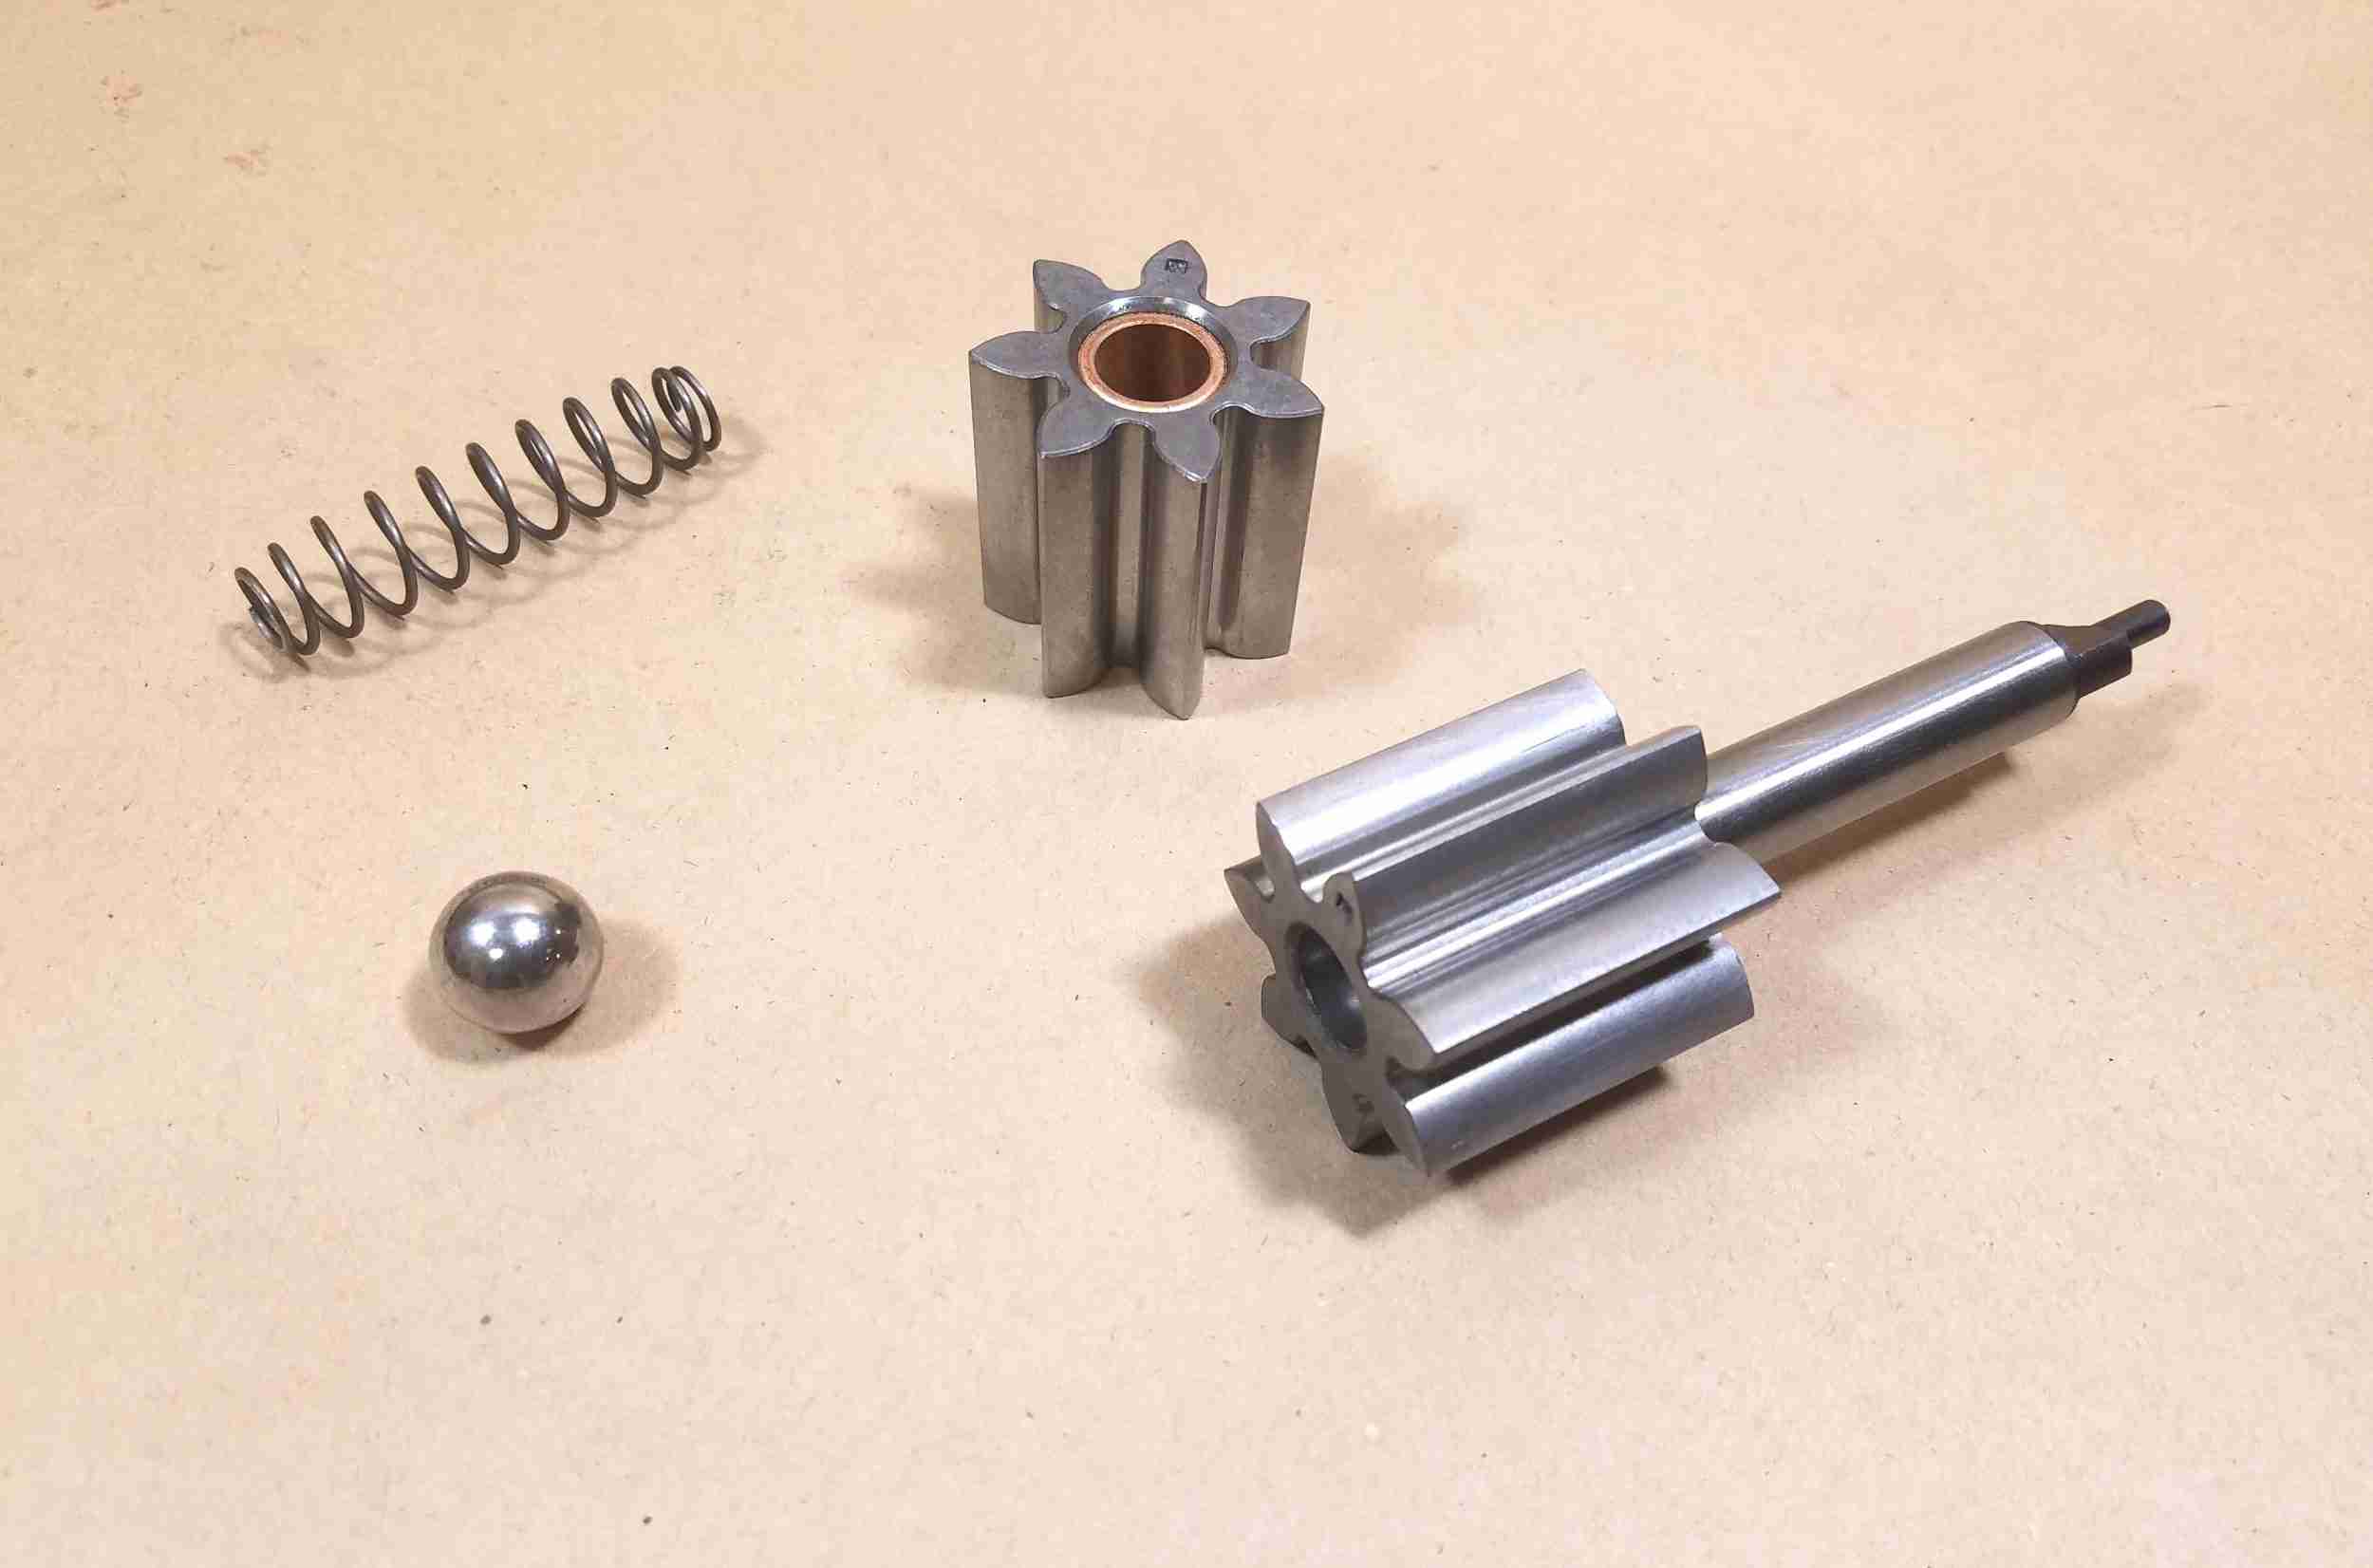 1955-62 Oil Pump Rebuild Kit, 2 gears, spring, ball check, gaskets